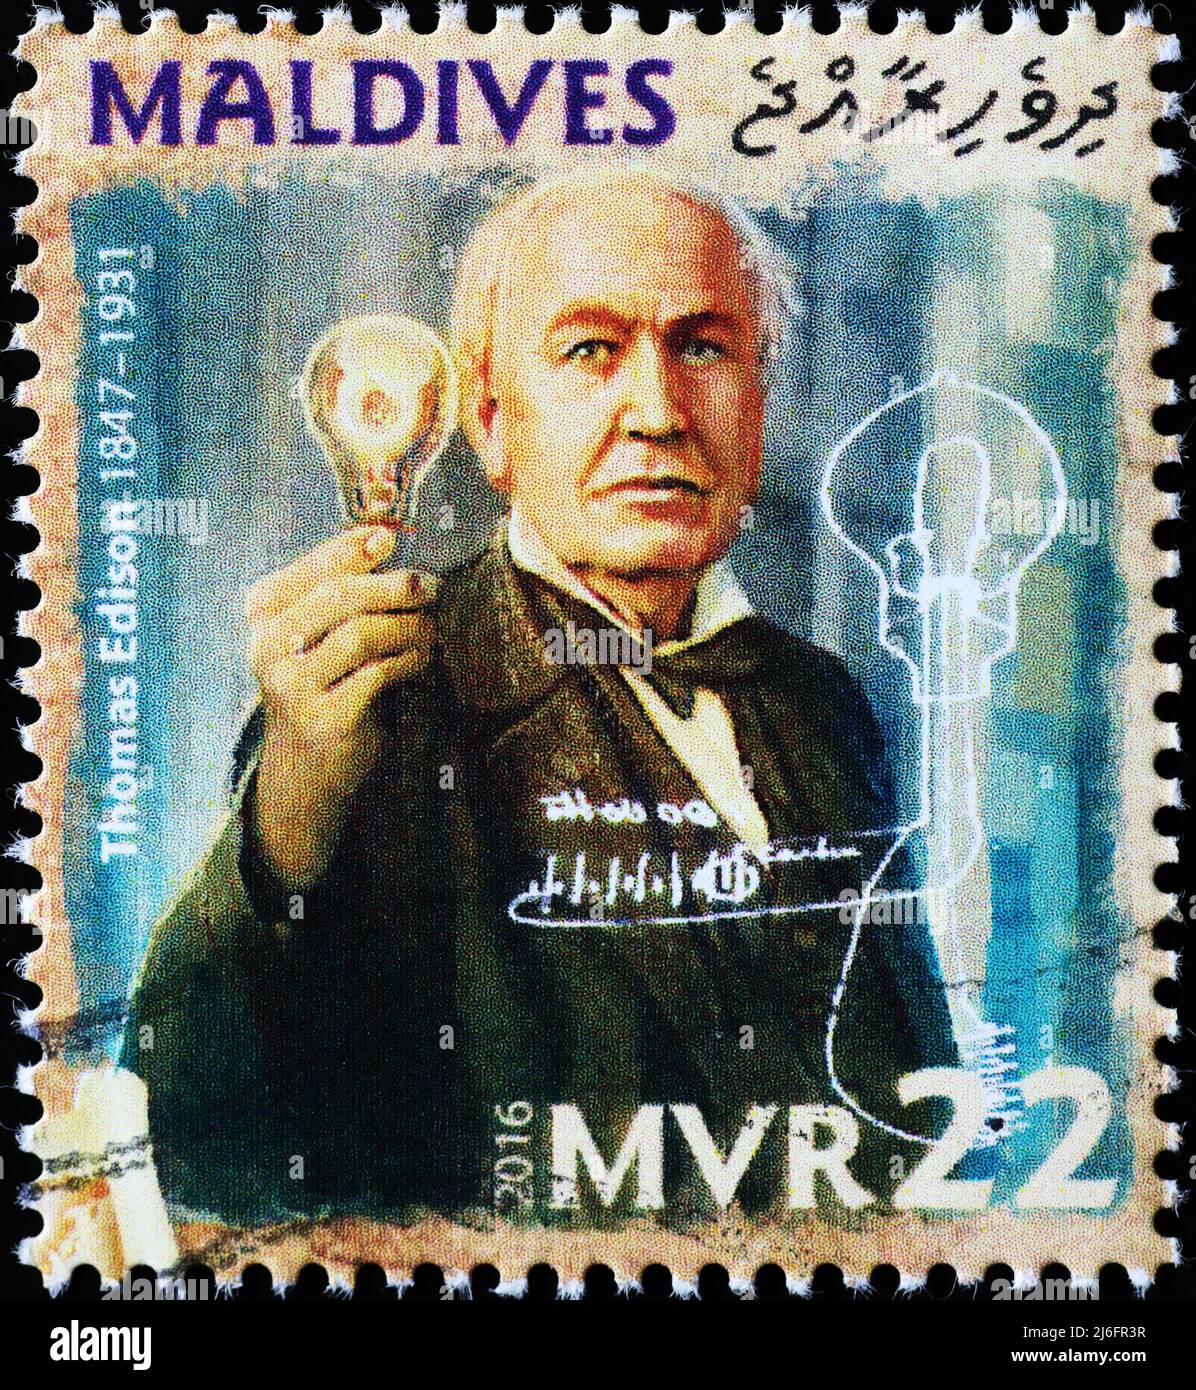 Thomas Edison showing his lamp on postage stamp Stock Photo